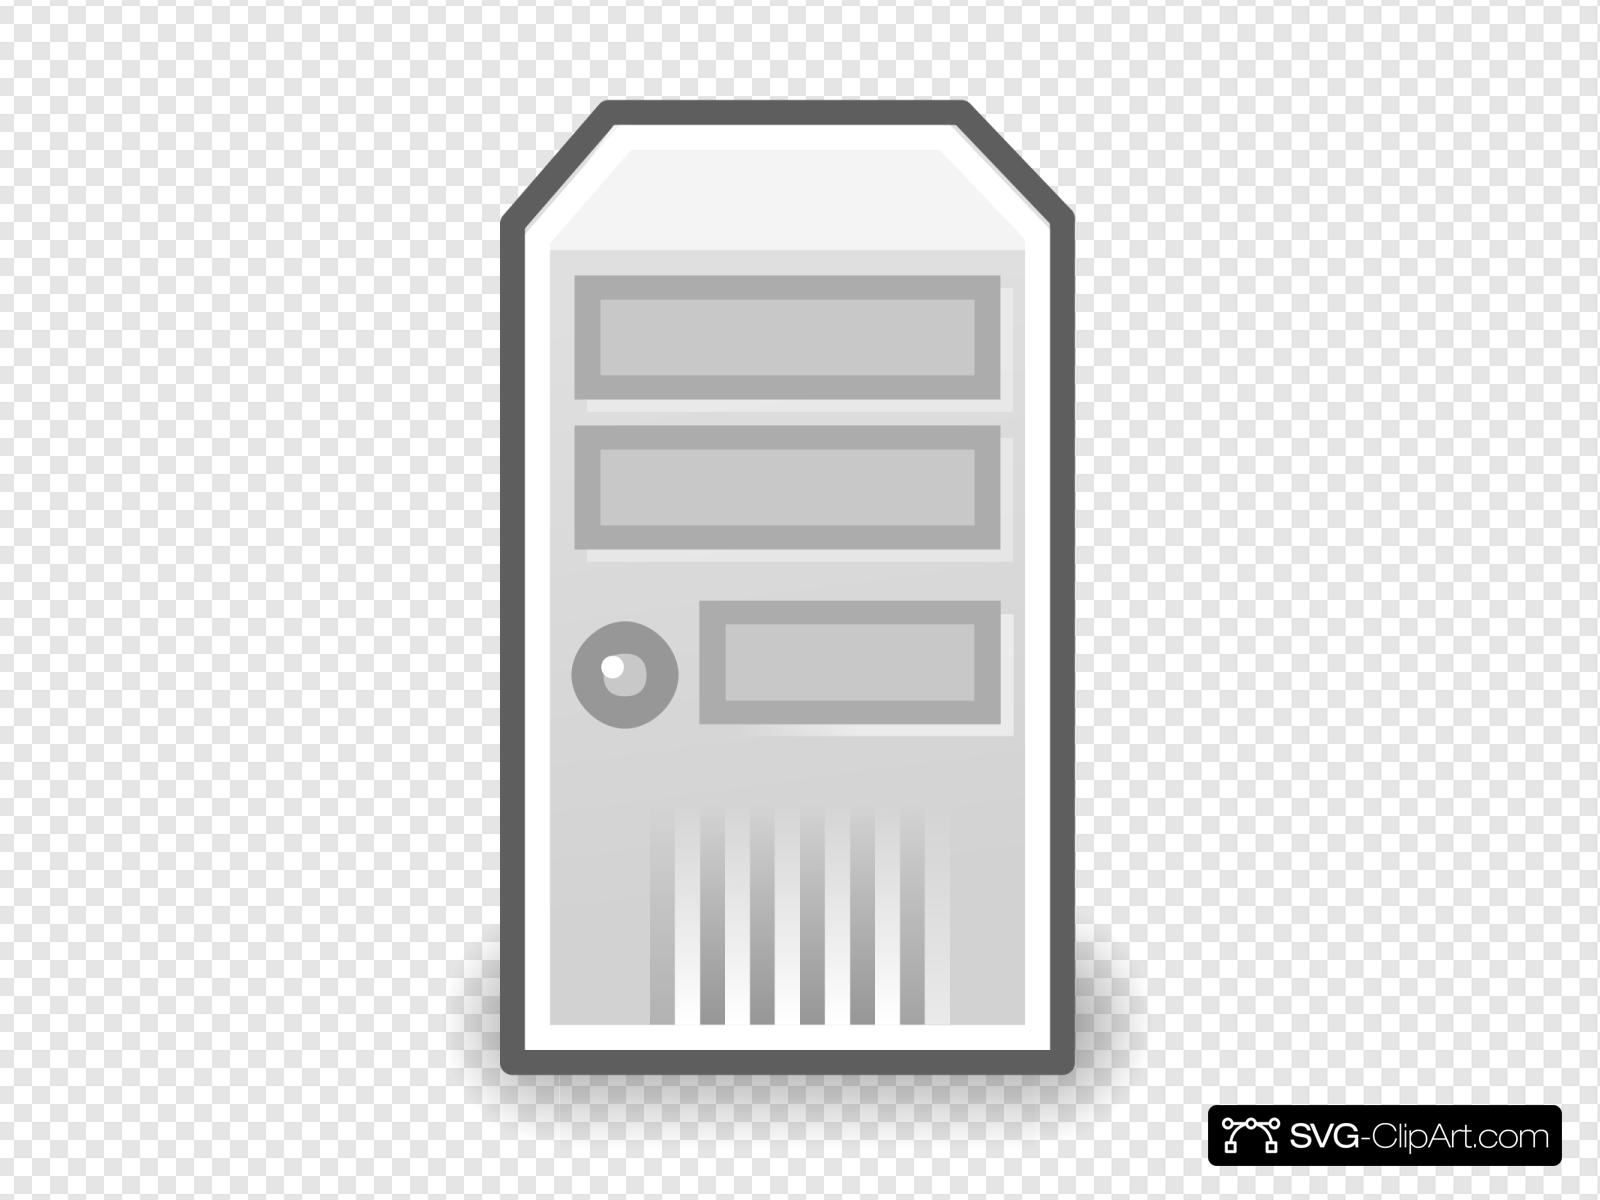 Computer Server Clip art, Icon and SVG